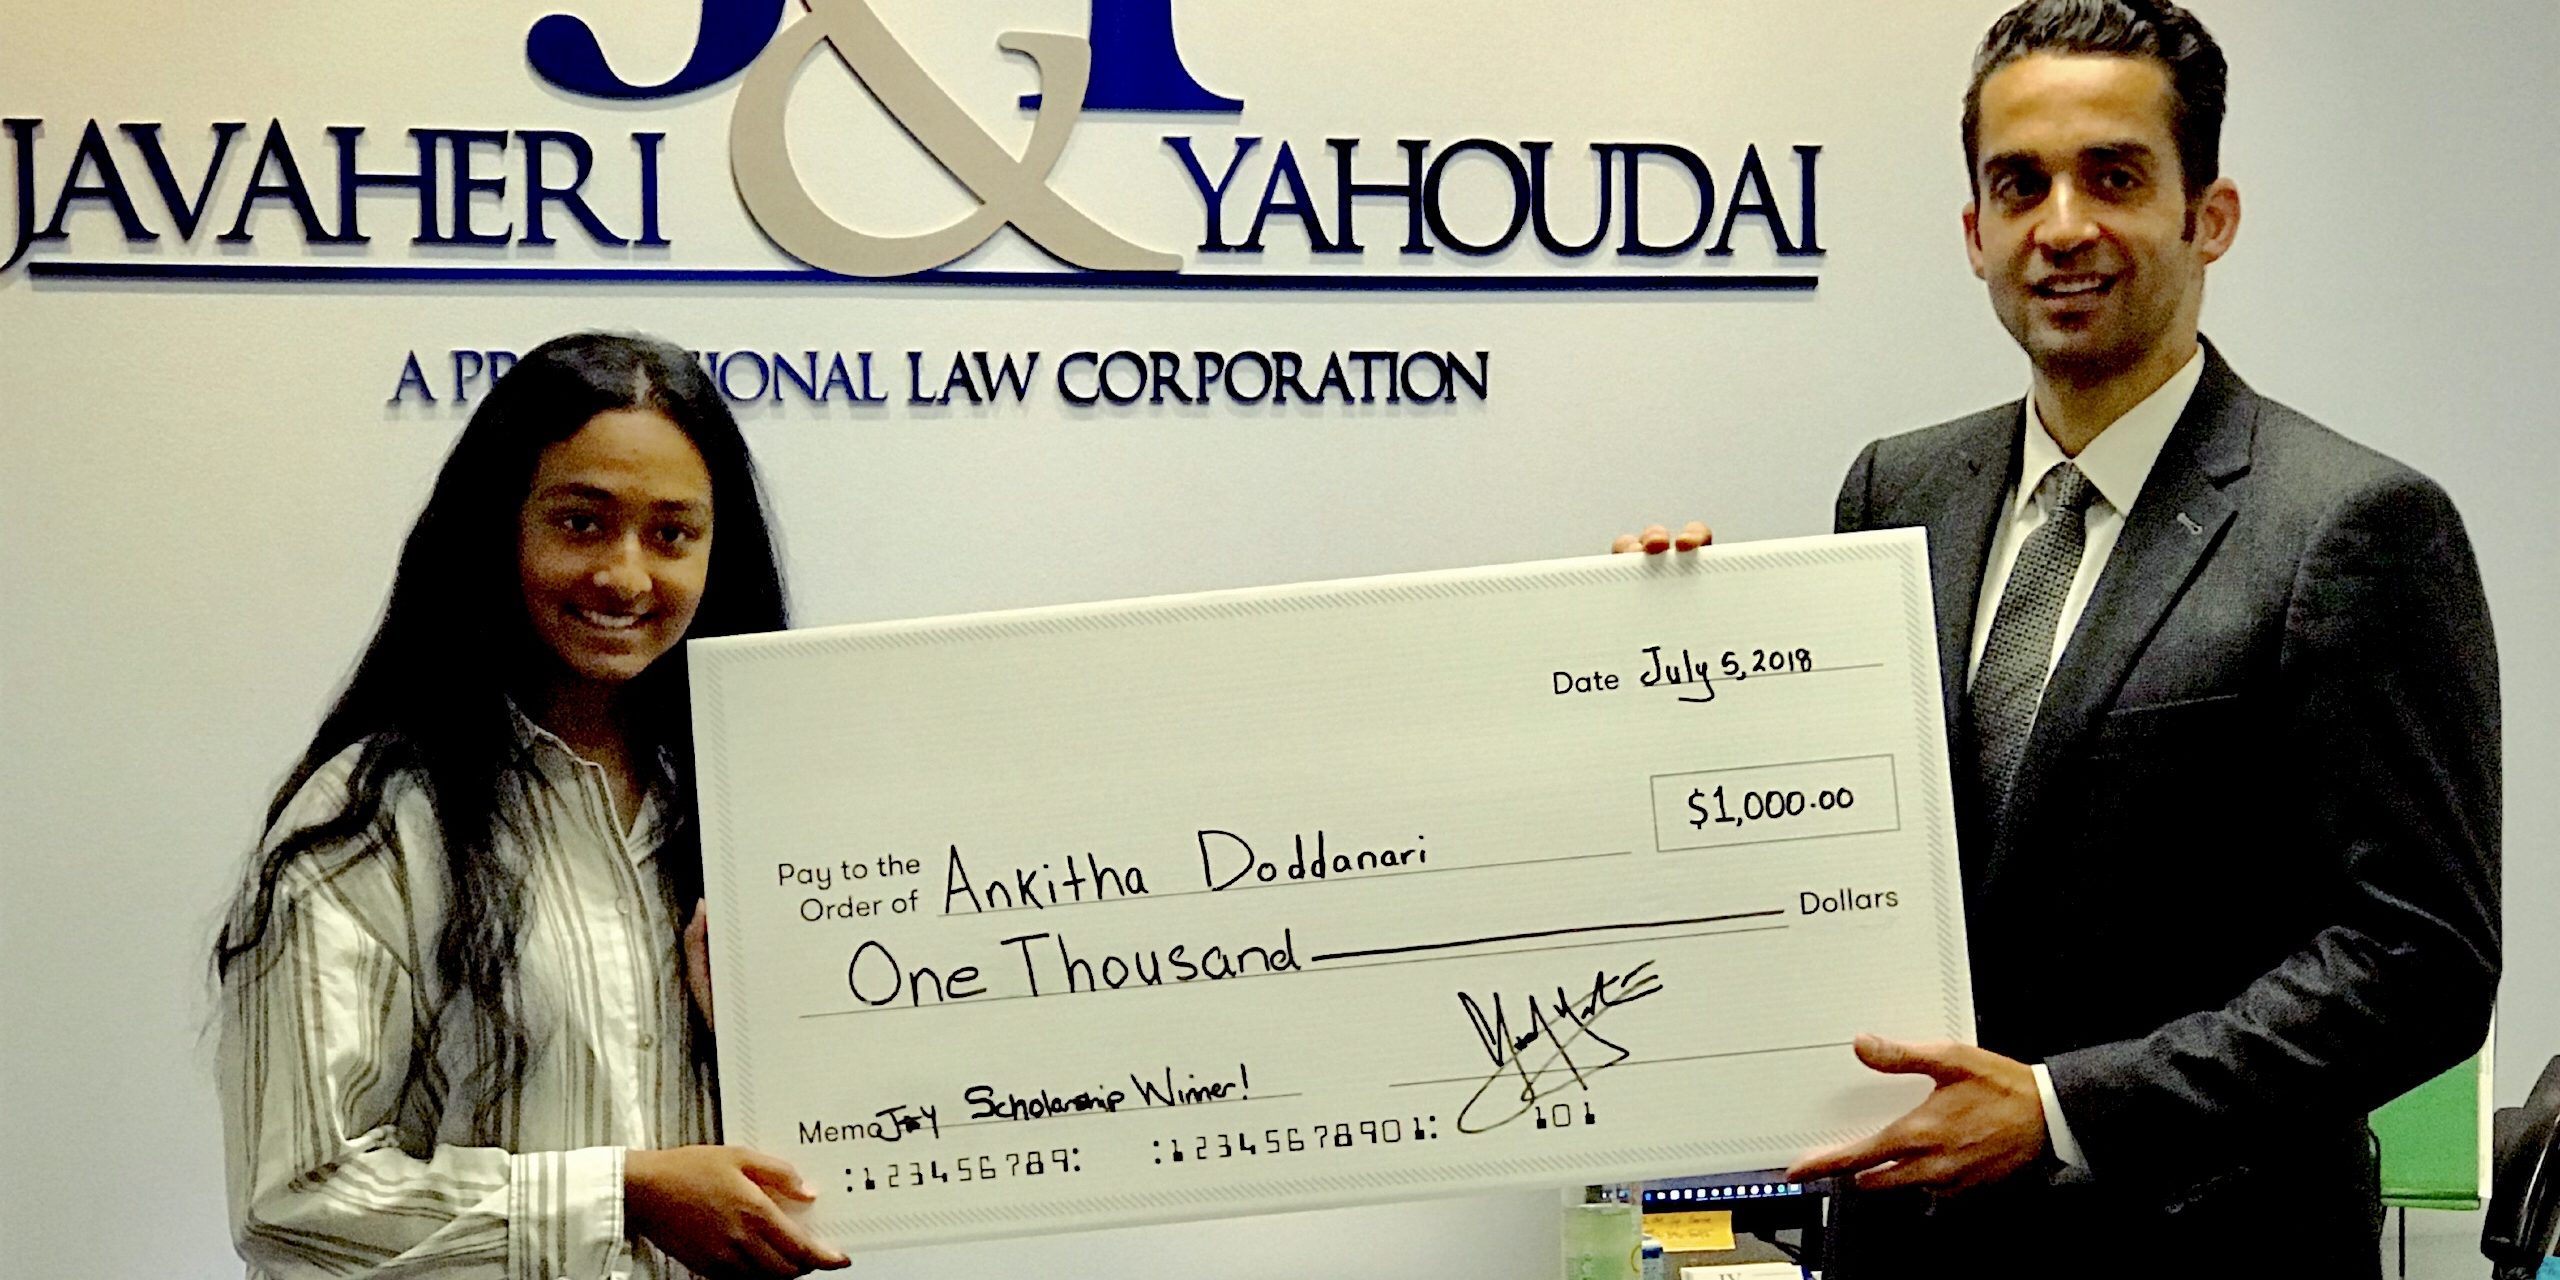 J&Y Scholarship Winner, Ankitha Doddanari’